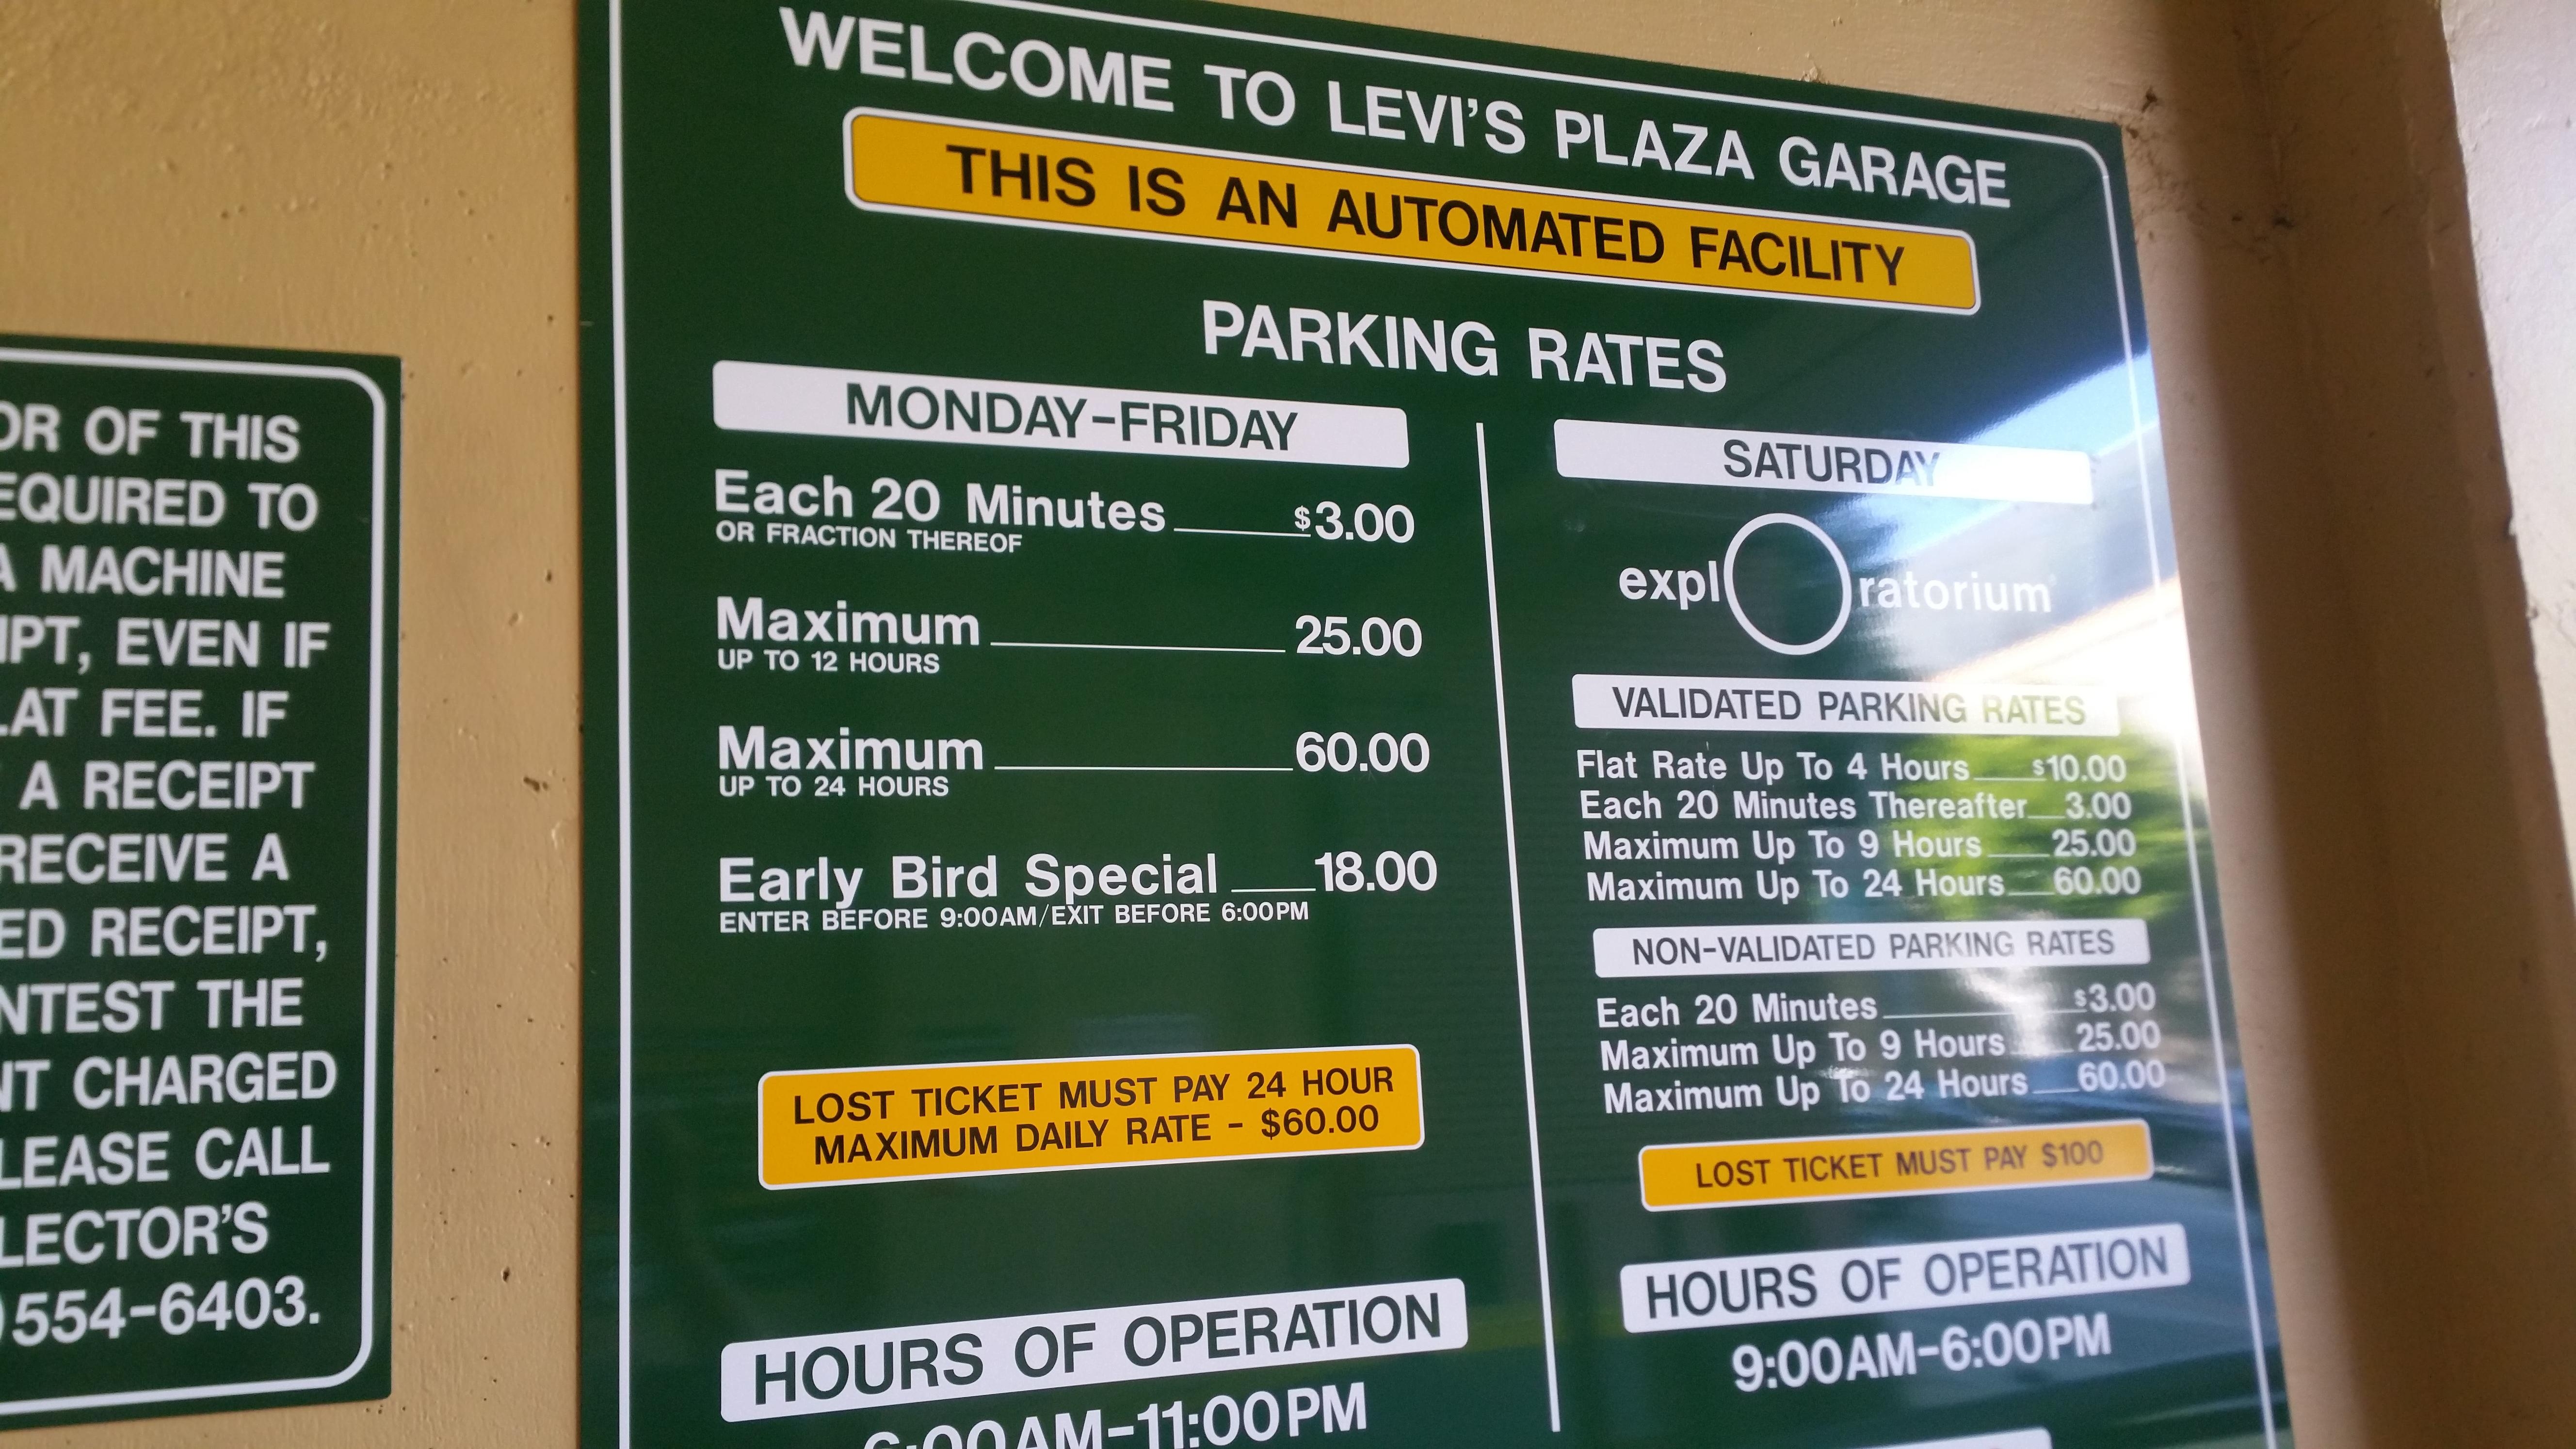 Levi's Plaza Garage - Parking in San Francisco | ParkMe